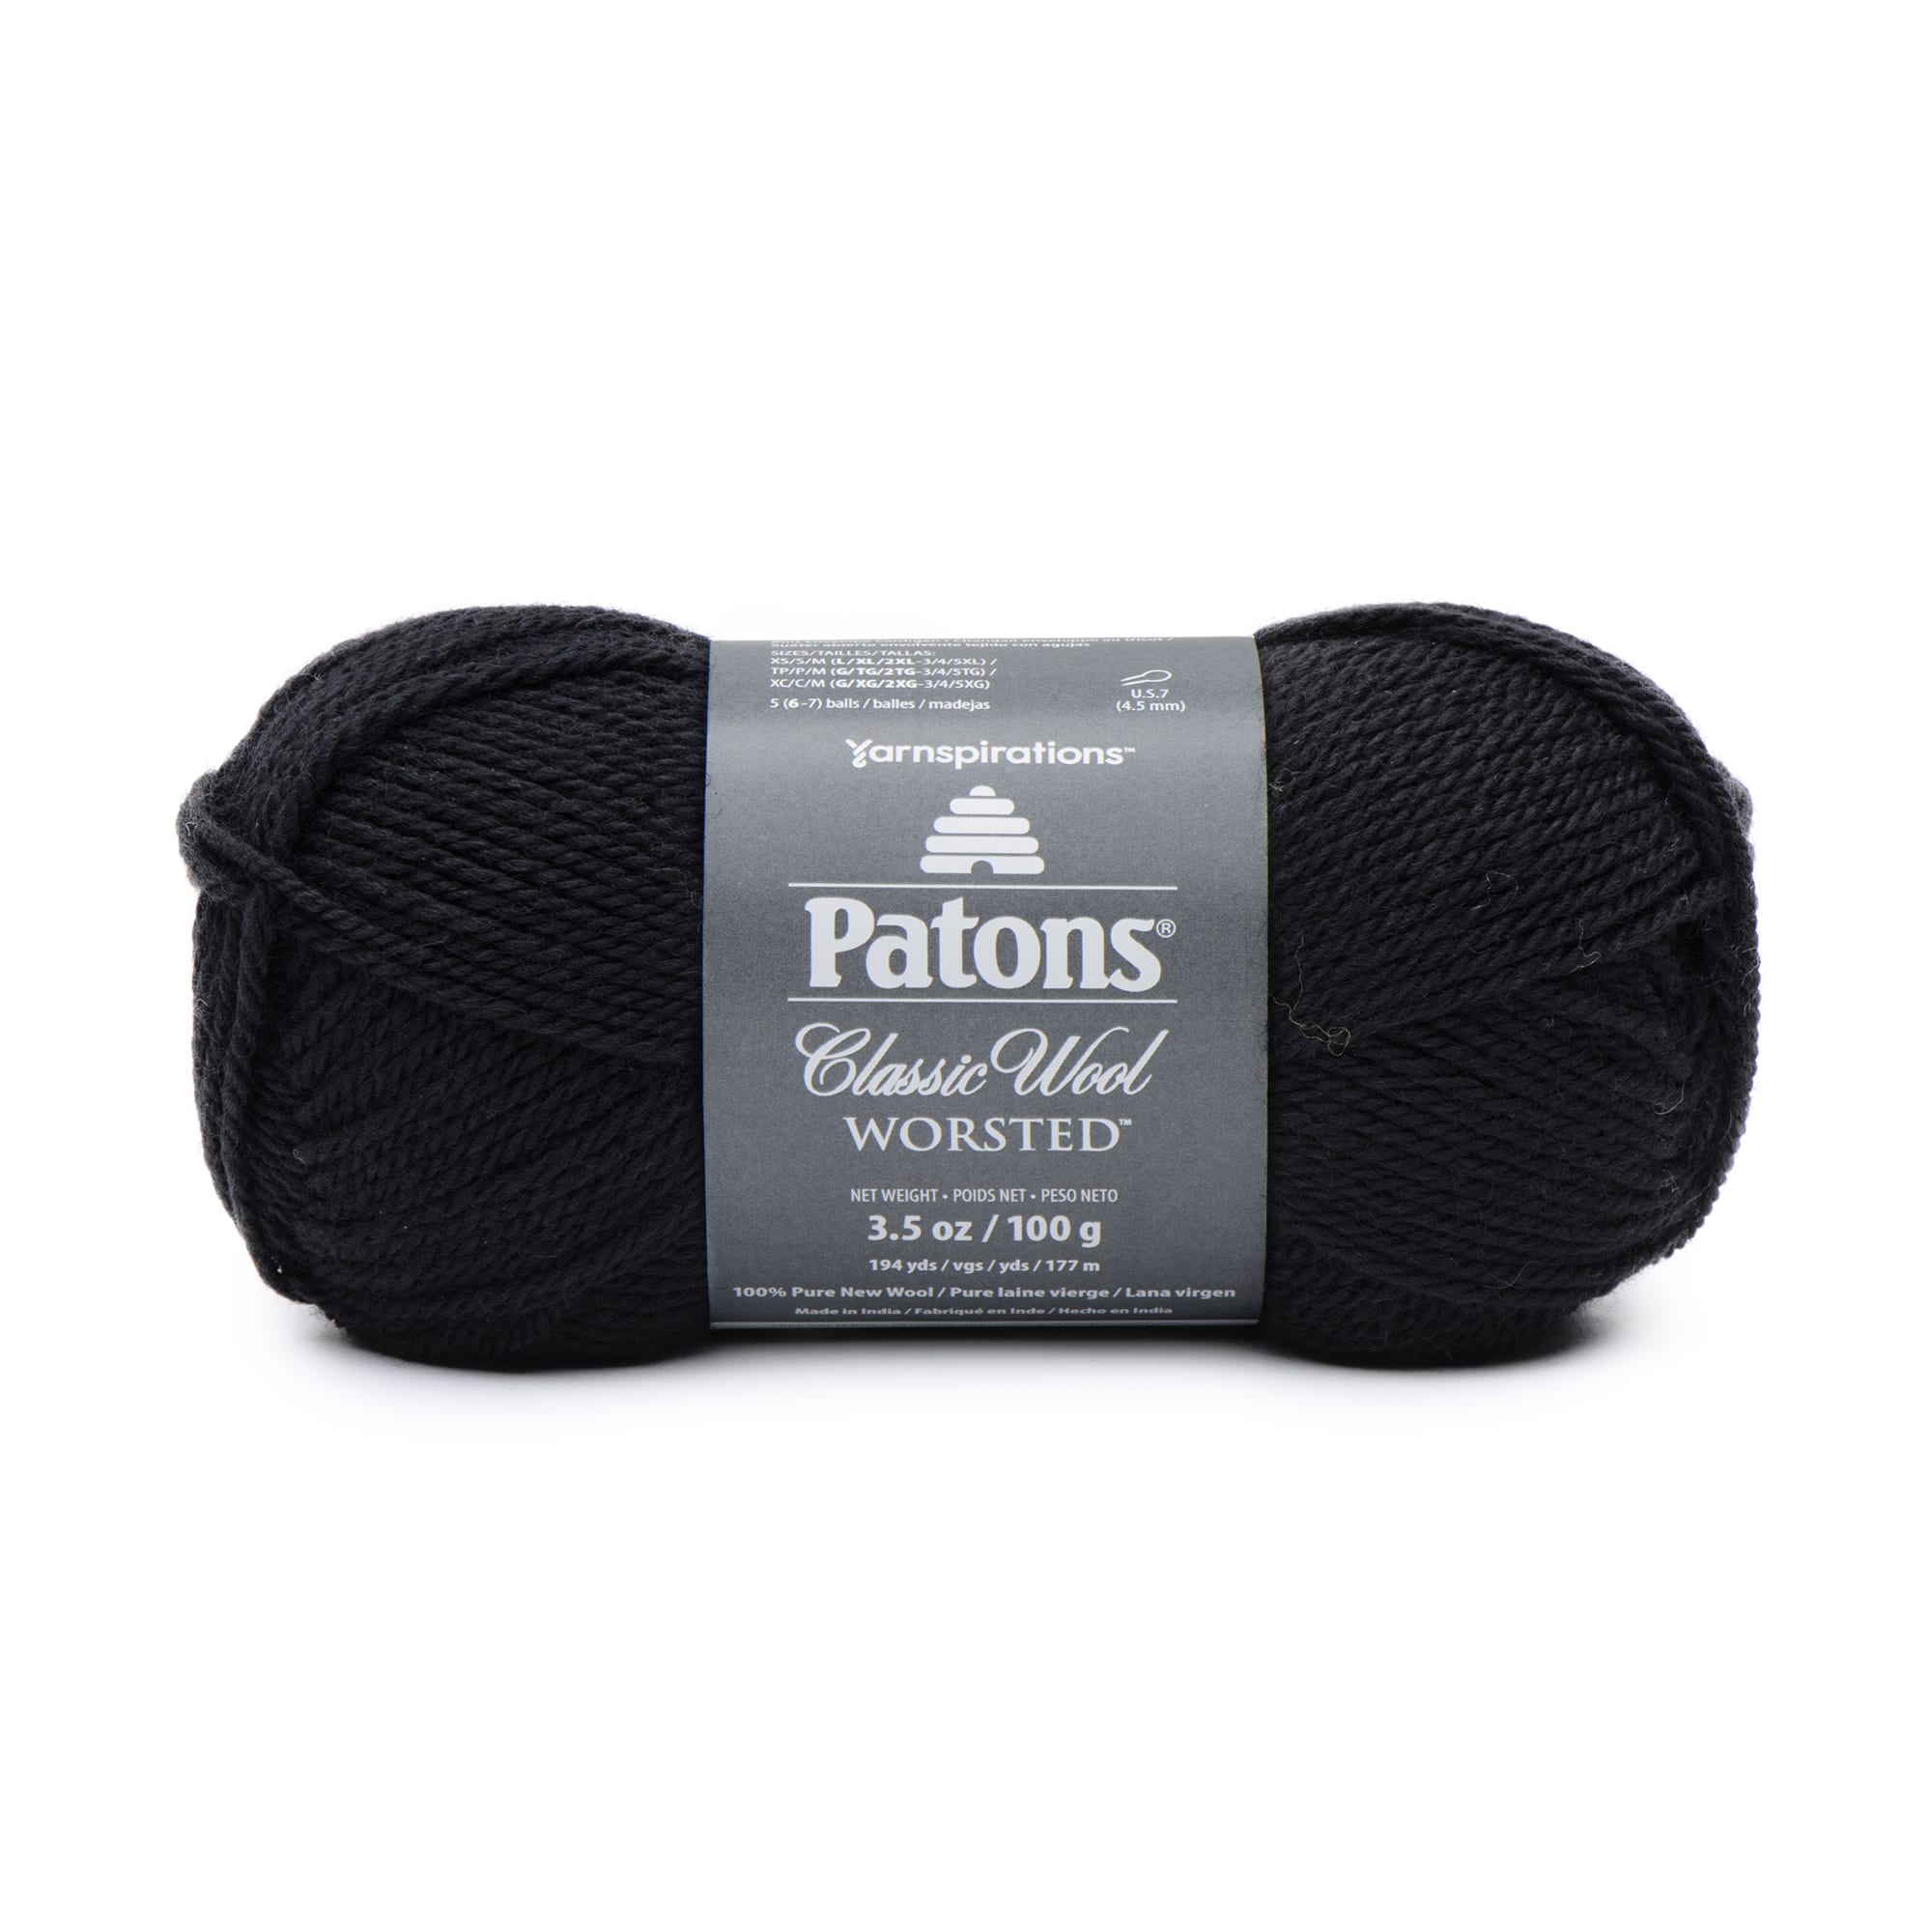 Patons 100% Cotton DK Yarn - 100 grm Ball